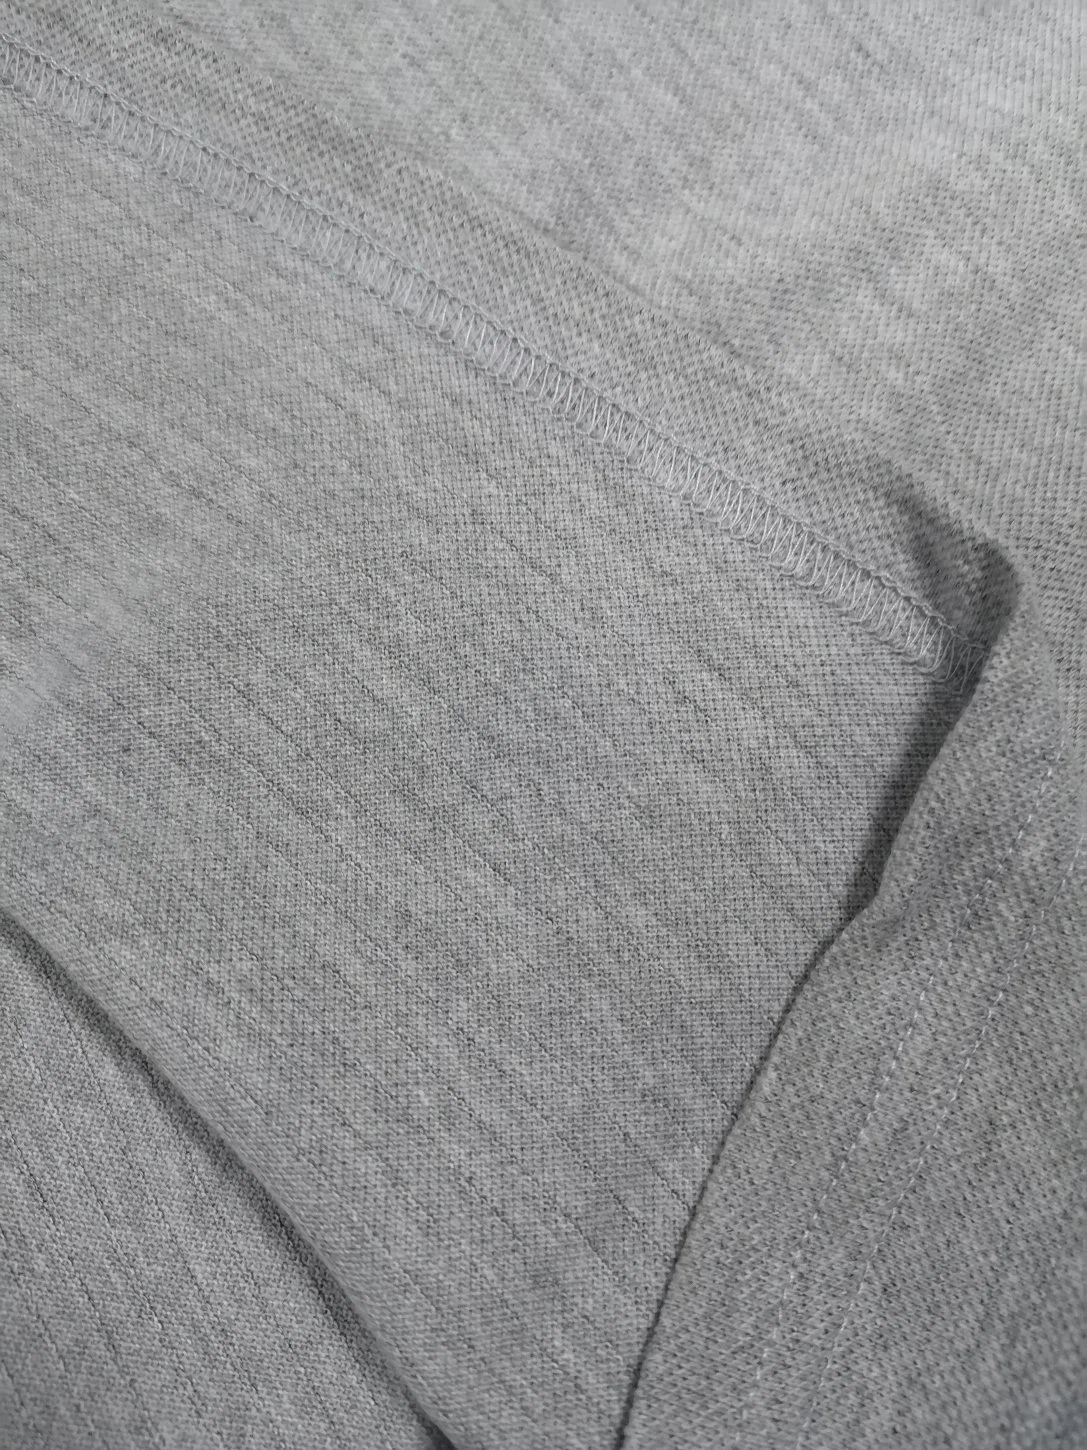 Ln-1560108 ESD Grey Color Polo Shirt with Cotton